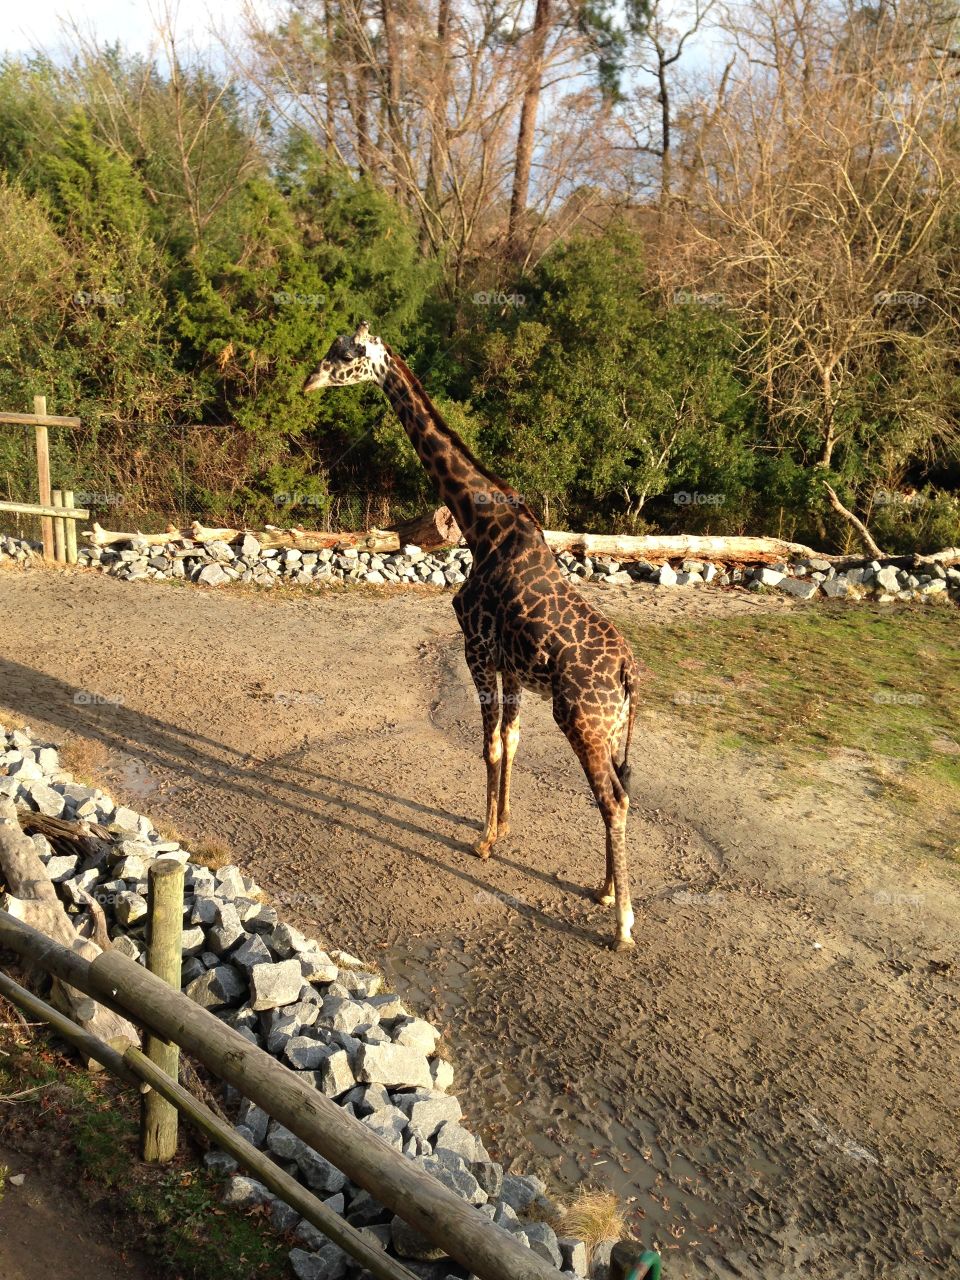 Giraffe at the zoo 